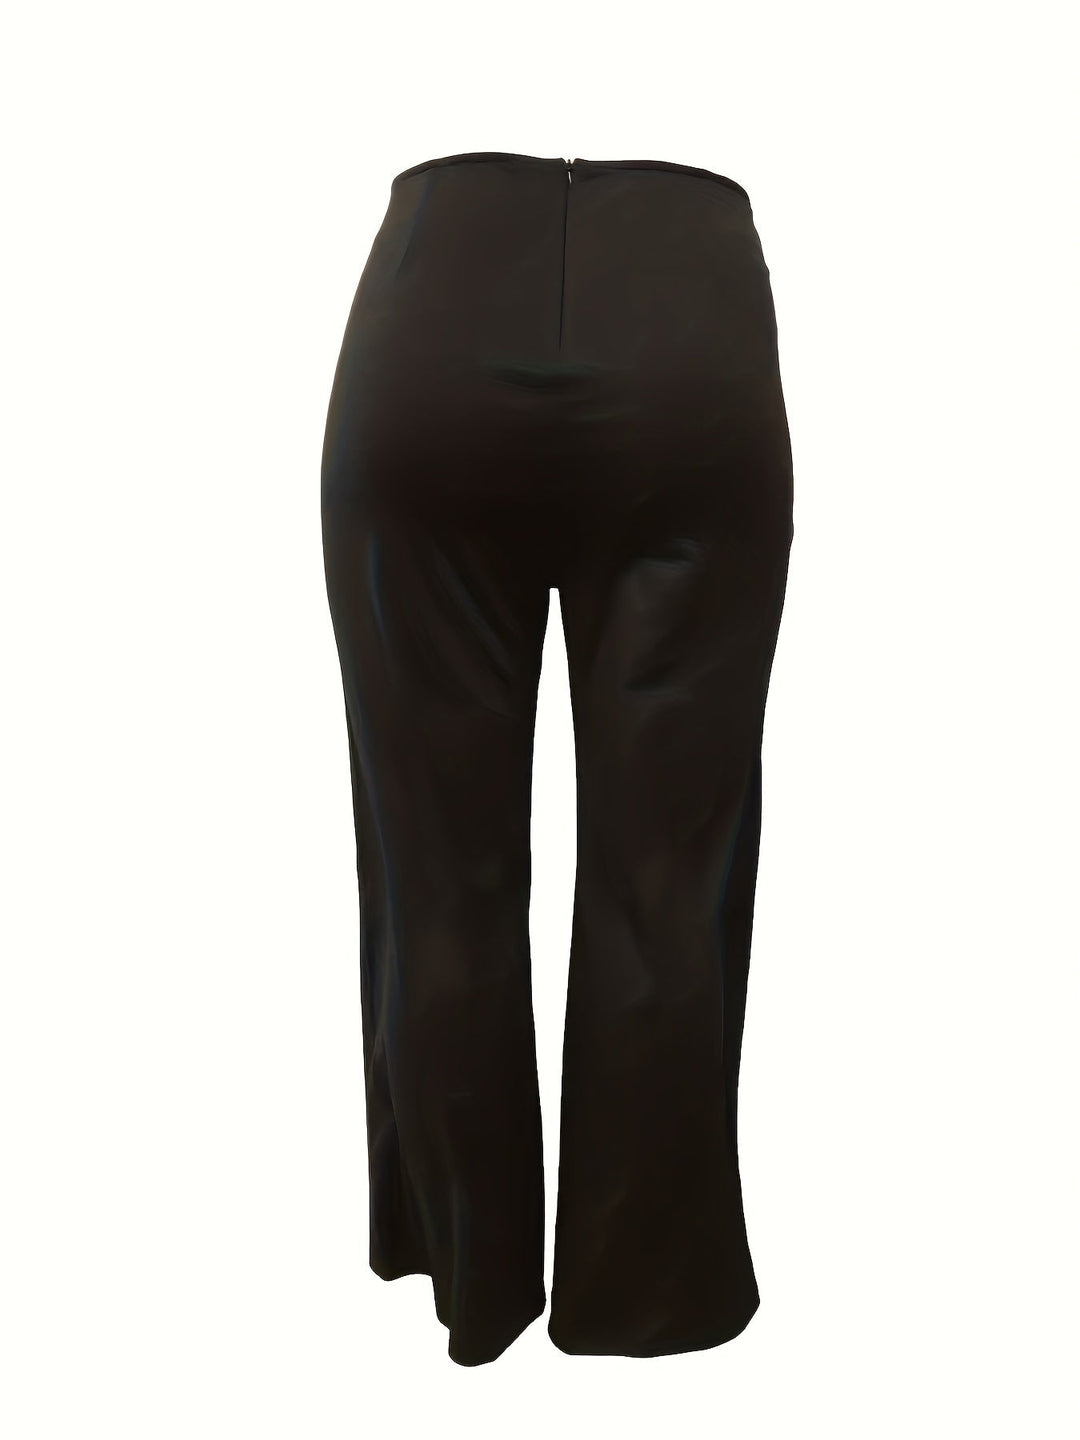 Office Lady Stylish Plus Size Buttoned Decor High Rise Wide Leg Pants - Gen U Us Products